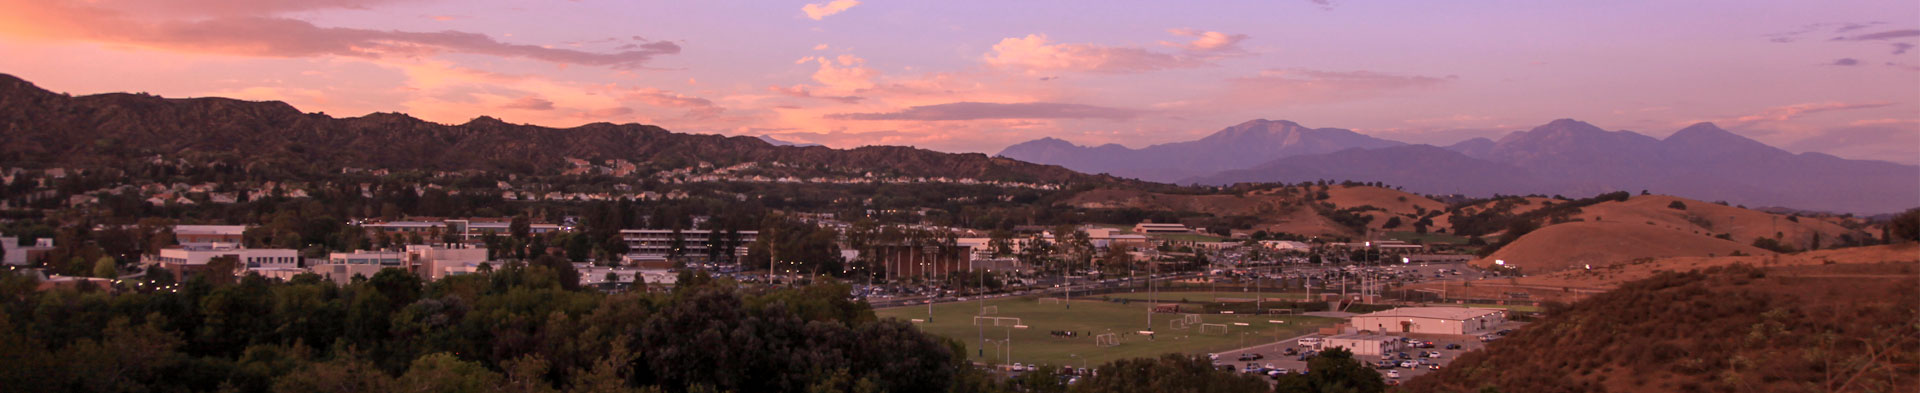 Panorama of Mt. SAC Campus